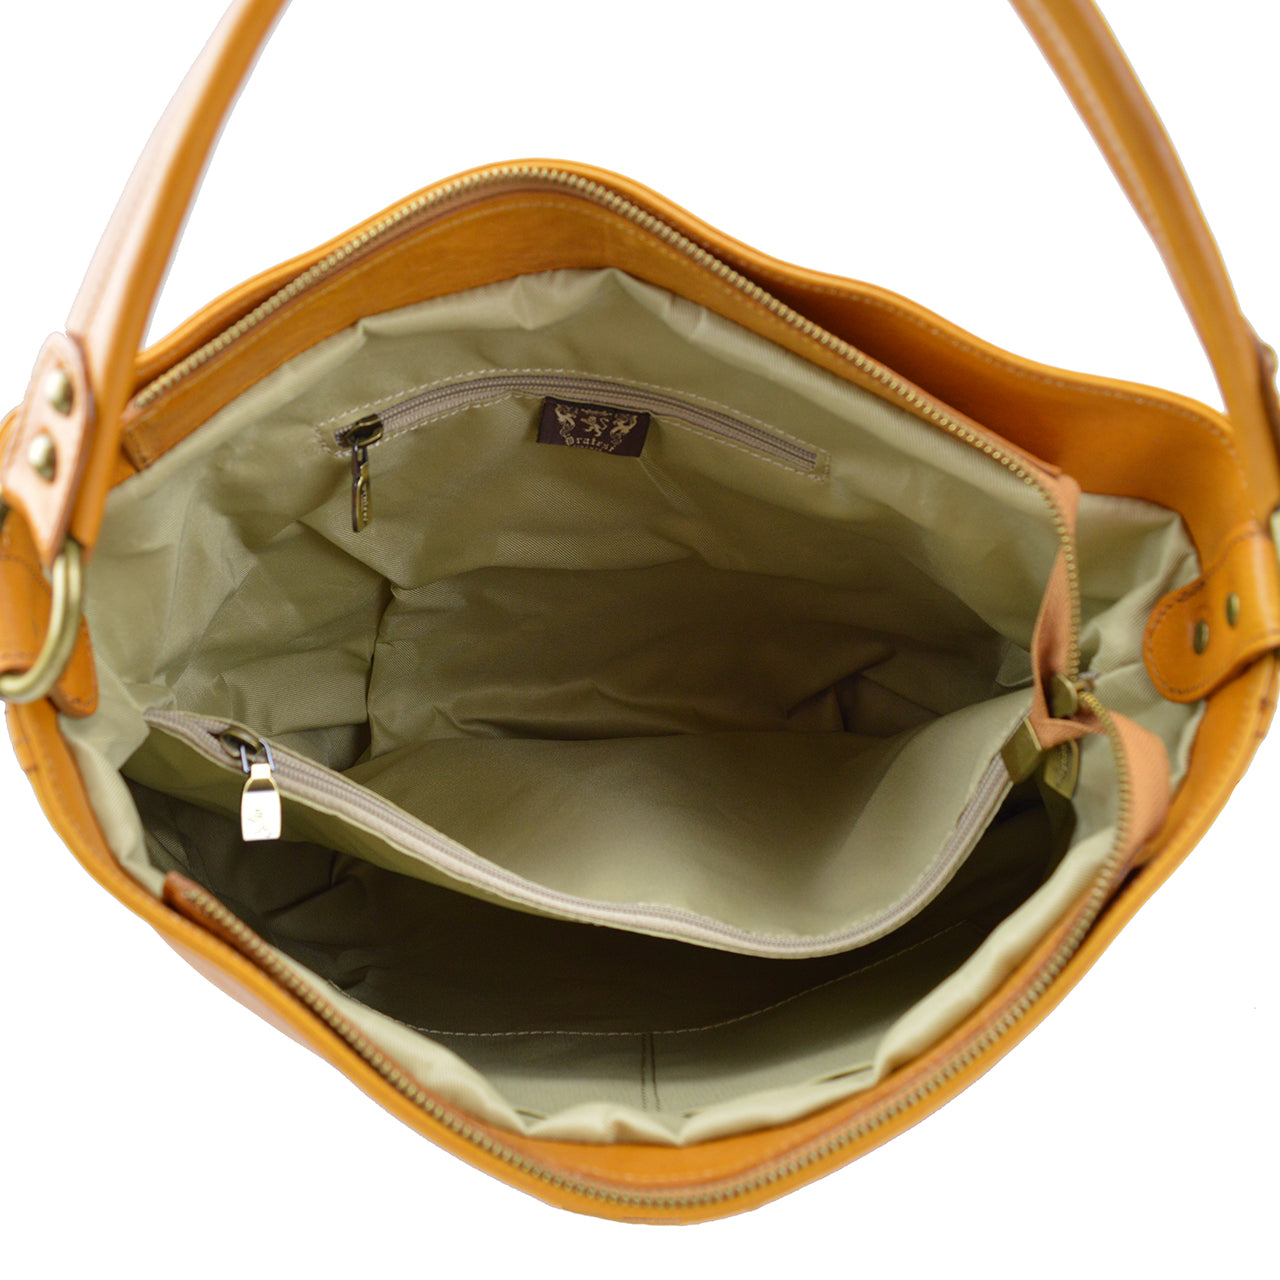 Pratesi Faella B477 Shoulder Bag in genuine Italian leather - Faella B477 Black